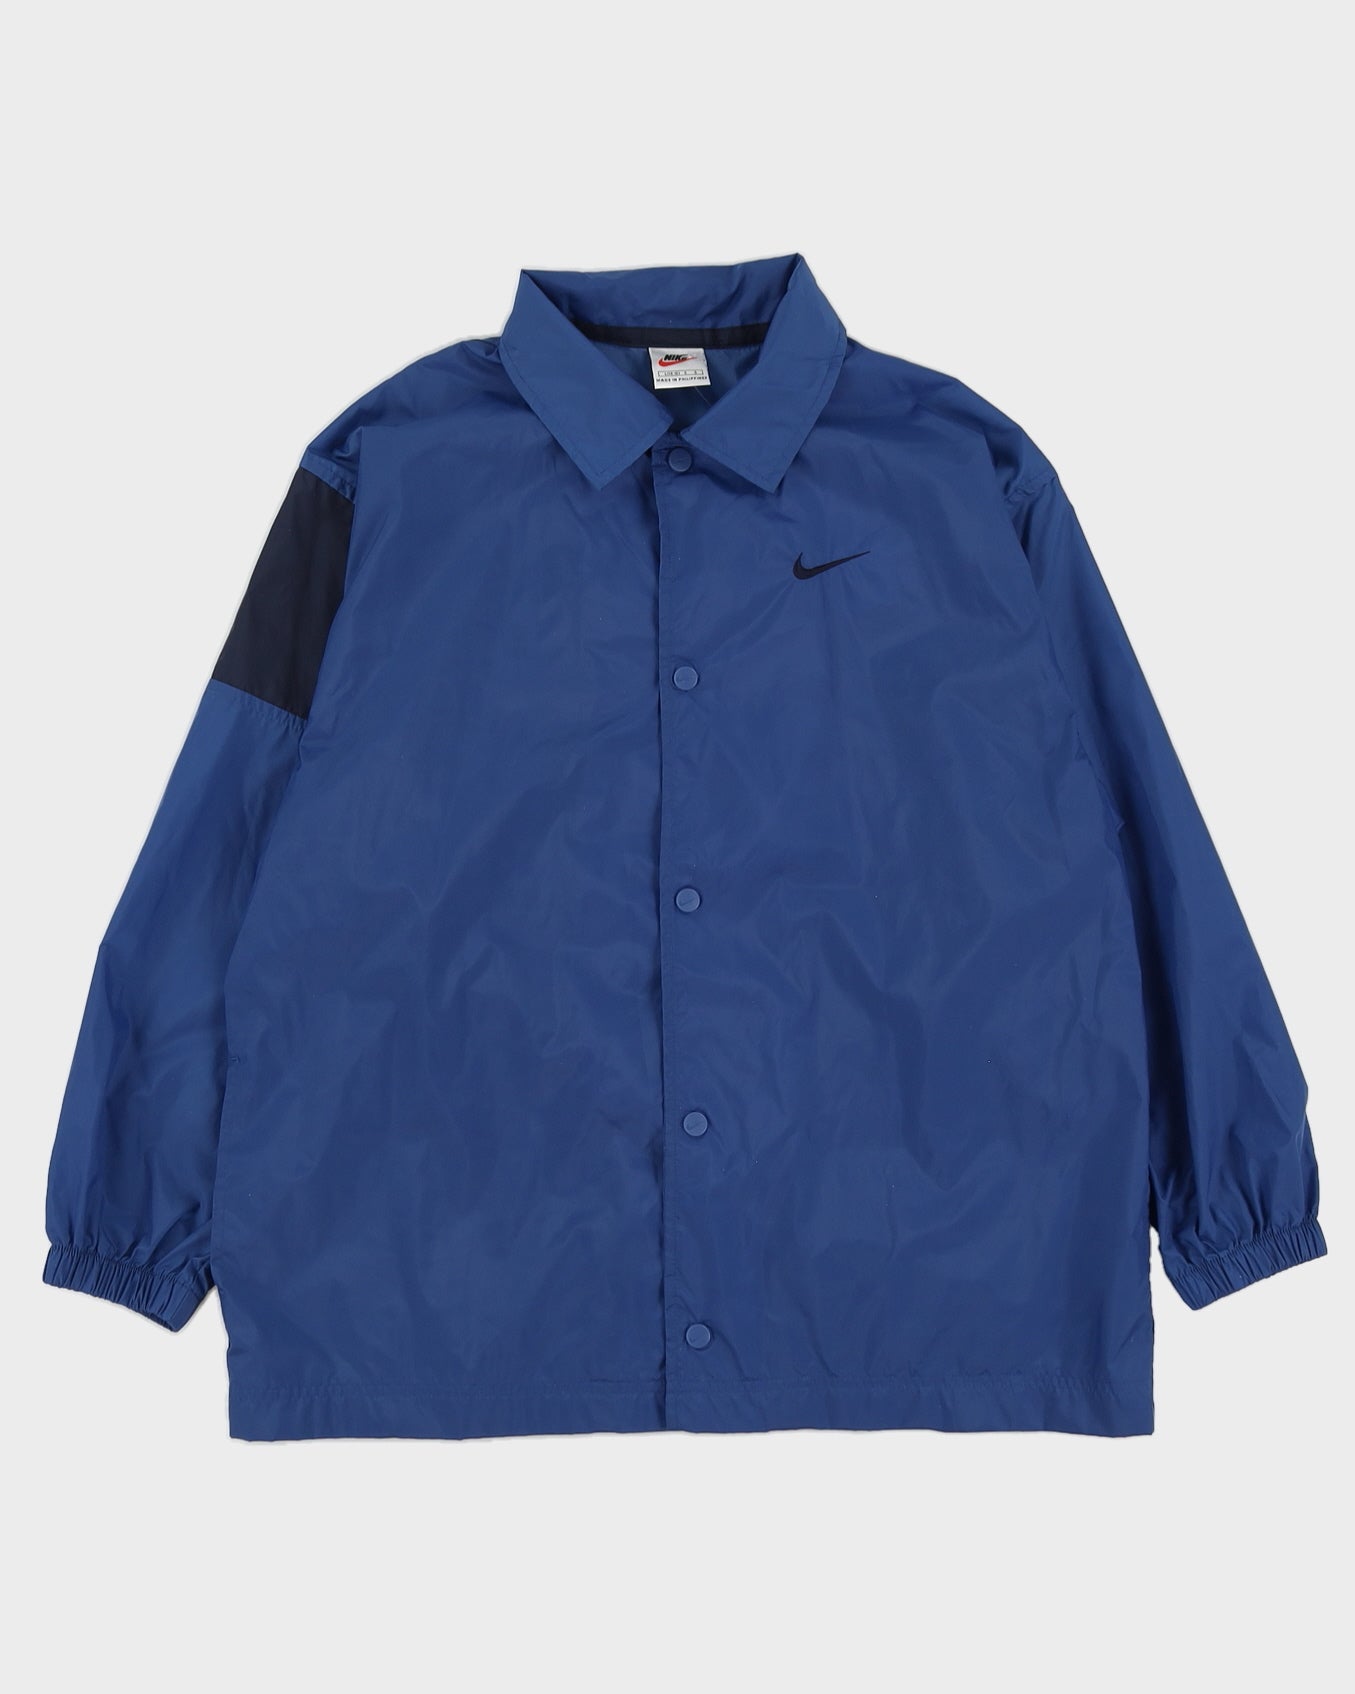 Vintage 90s Nike Blue Track Jacket With Logo On The Back - M